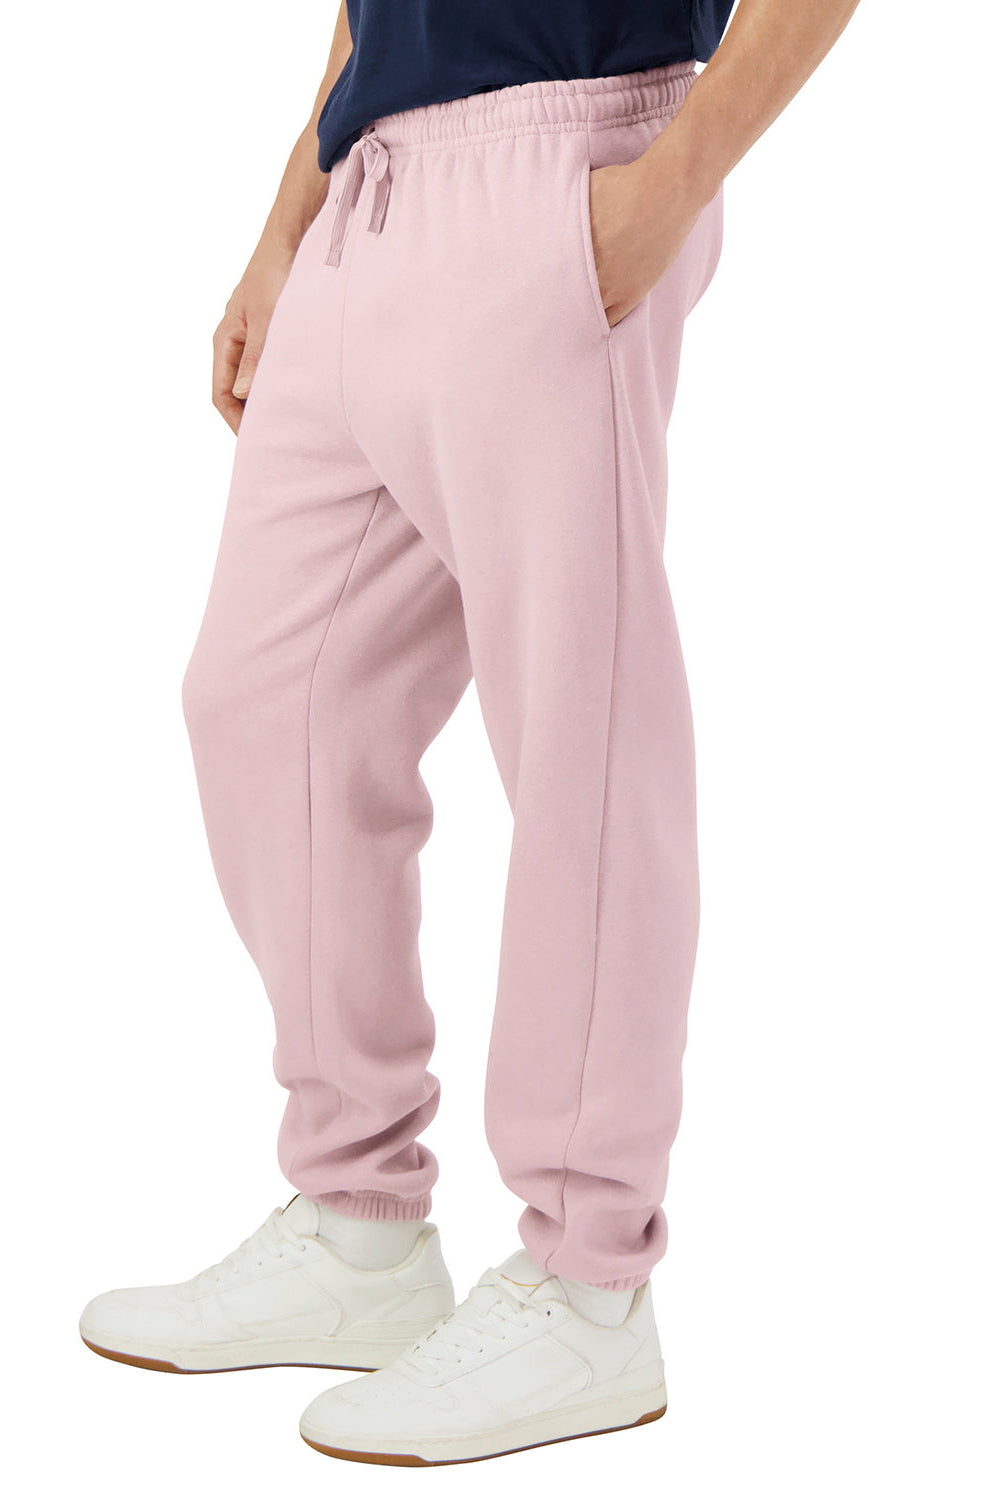 American Apparel RF491 Mens ReFlex Fleece Sweatpants w/ Pockets Blush Model Side